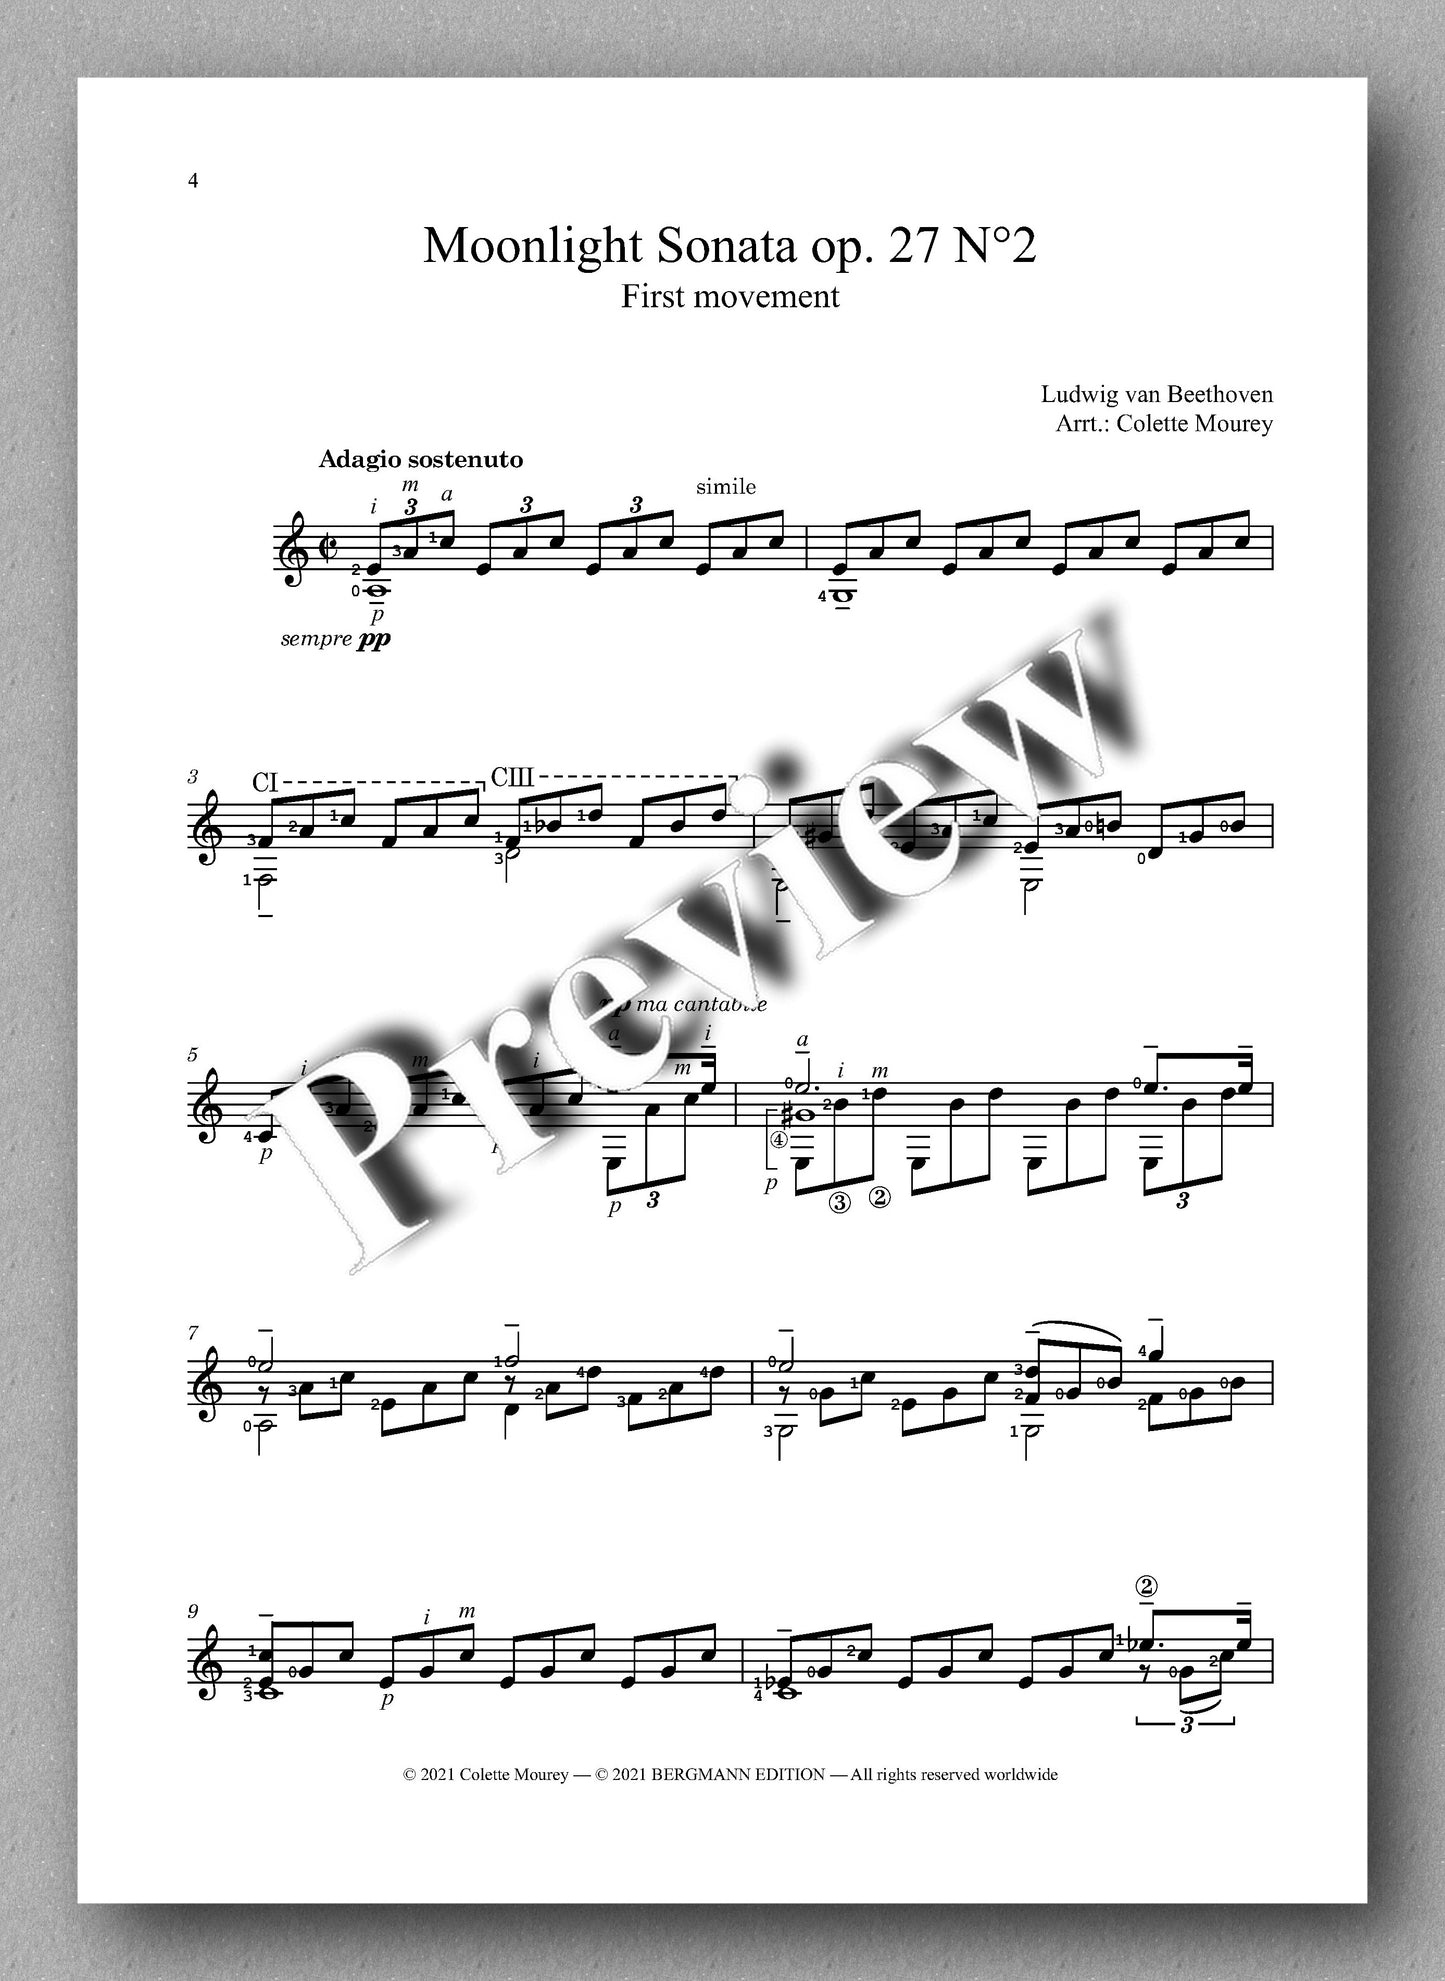 Beethoven-Mourey, Moonlight Sonata - music score 1